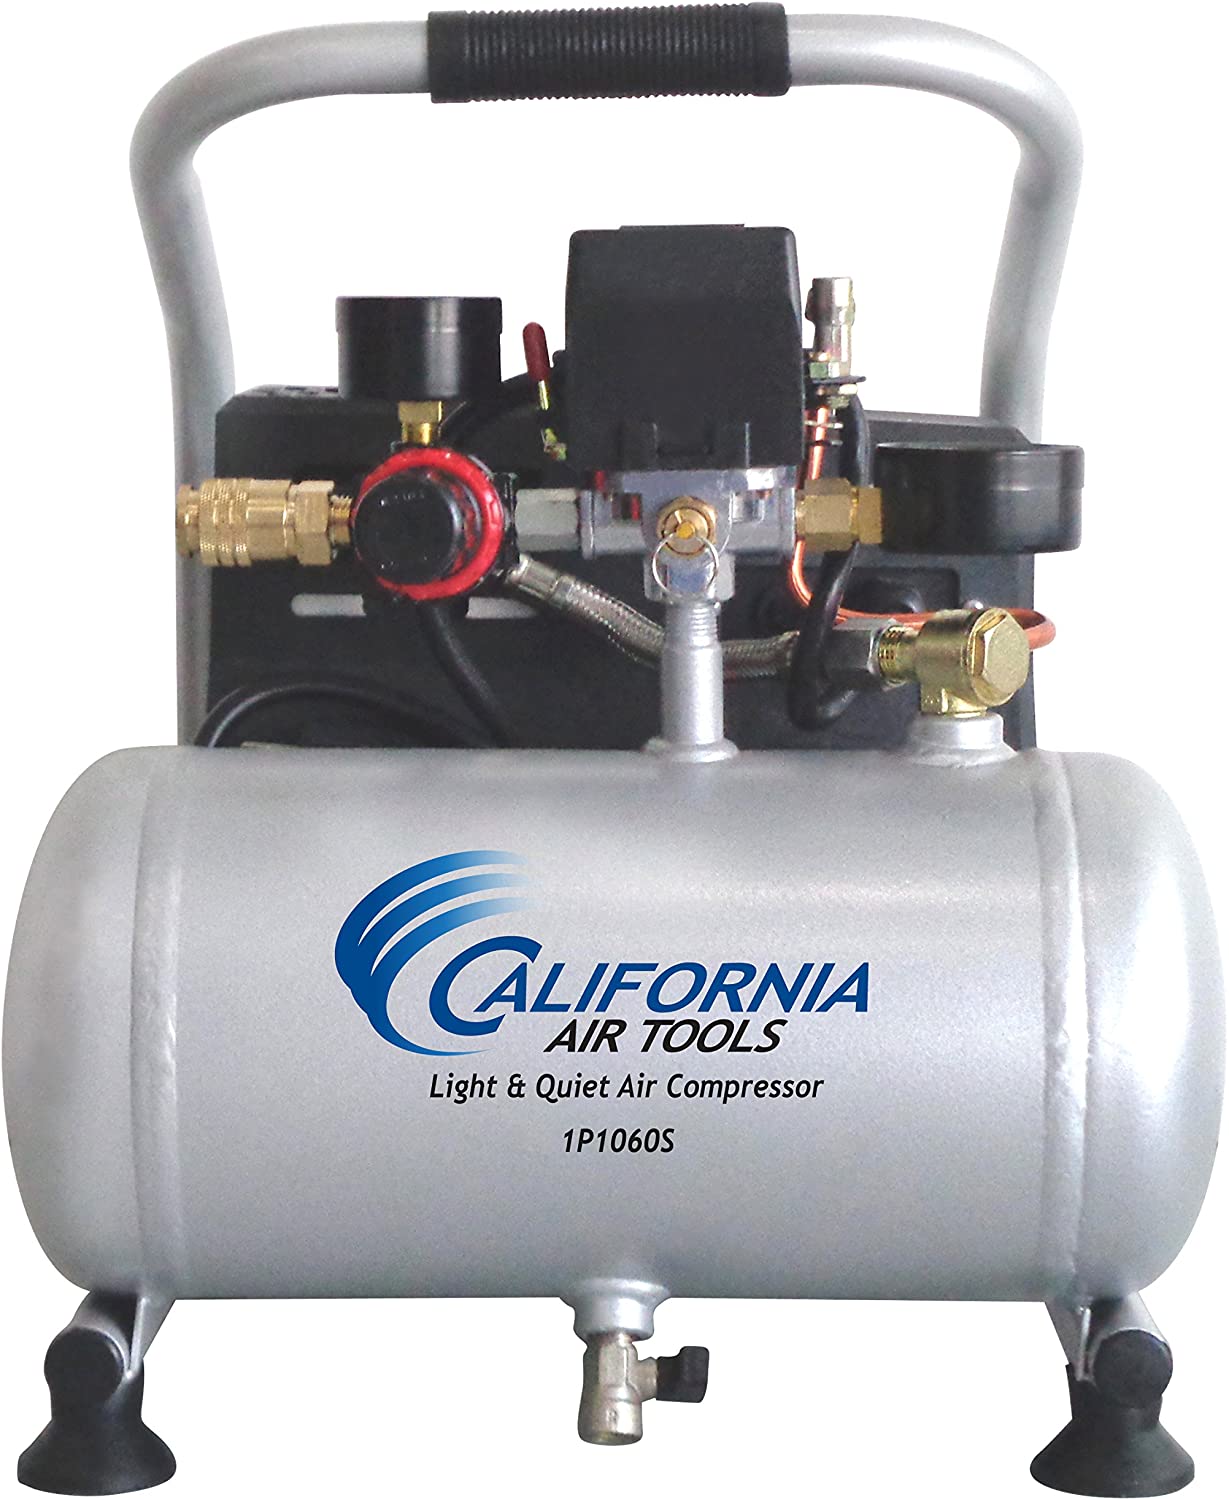 California Air Tools 8010 Steel Tank Air Compressor